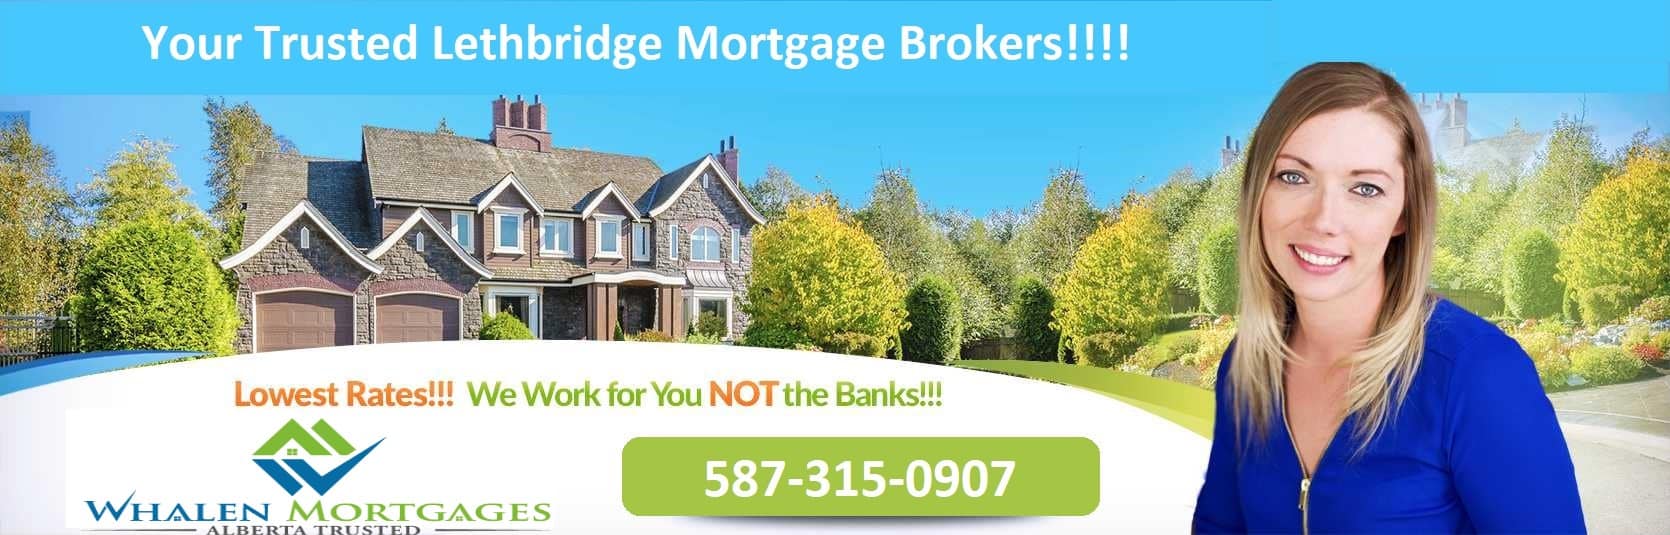 RMG Lethbridge Mortgage